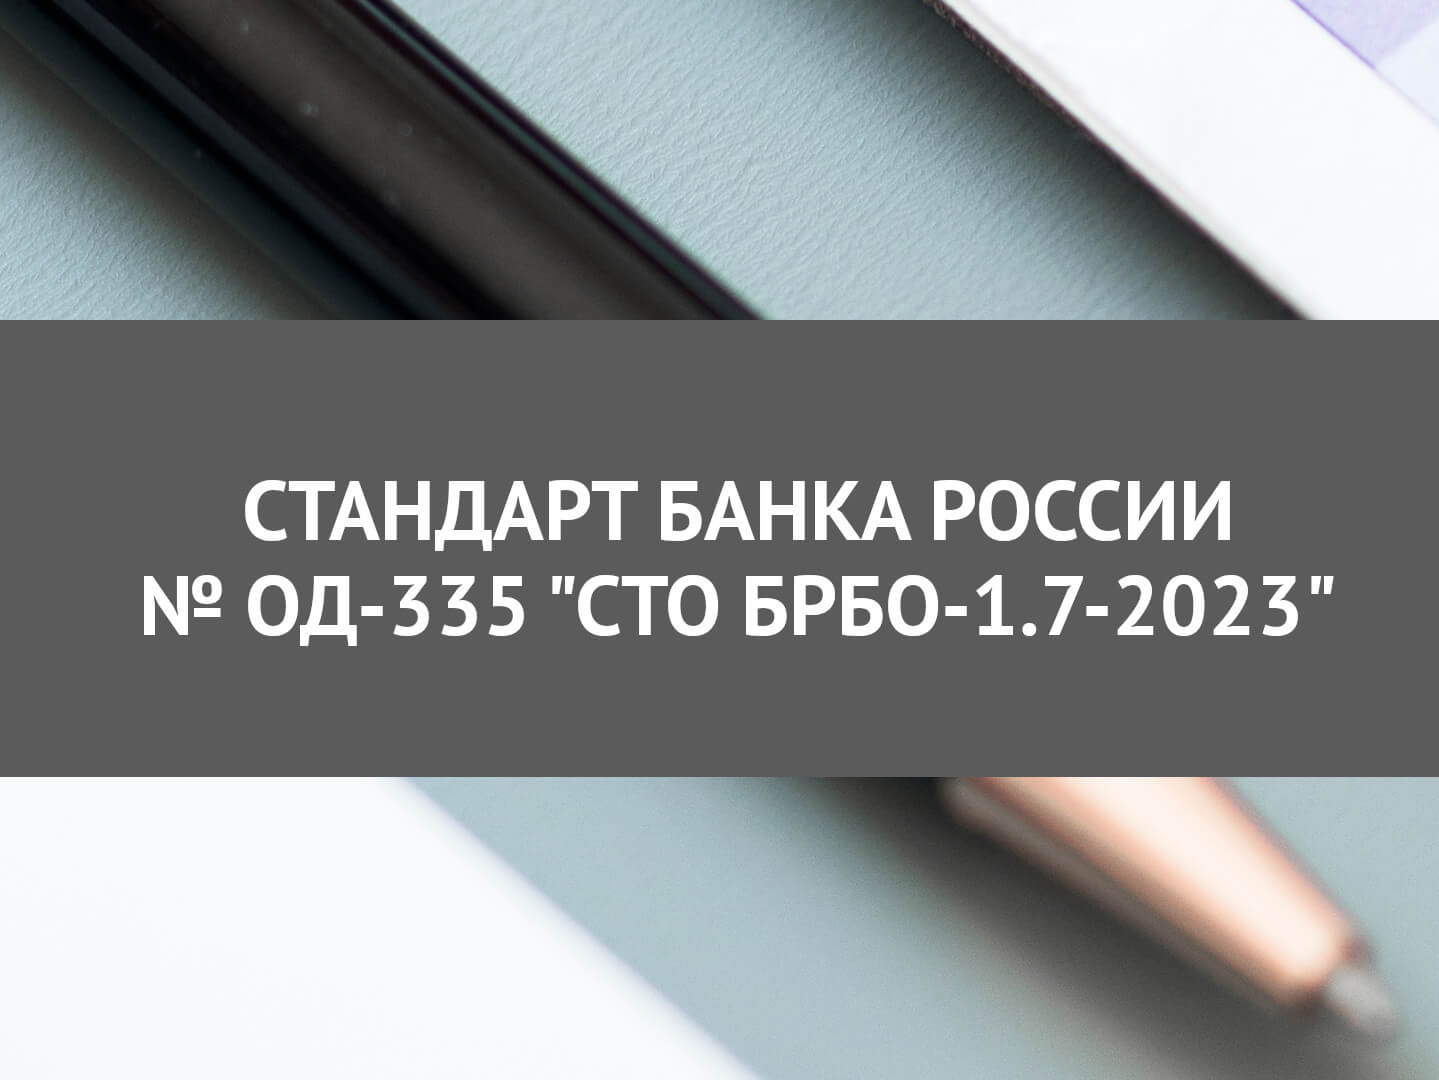 Обзор Стандарта Банка России от 01.03.2023 № ОД-335 «СТО БР БФБО-1.7-2023»